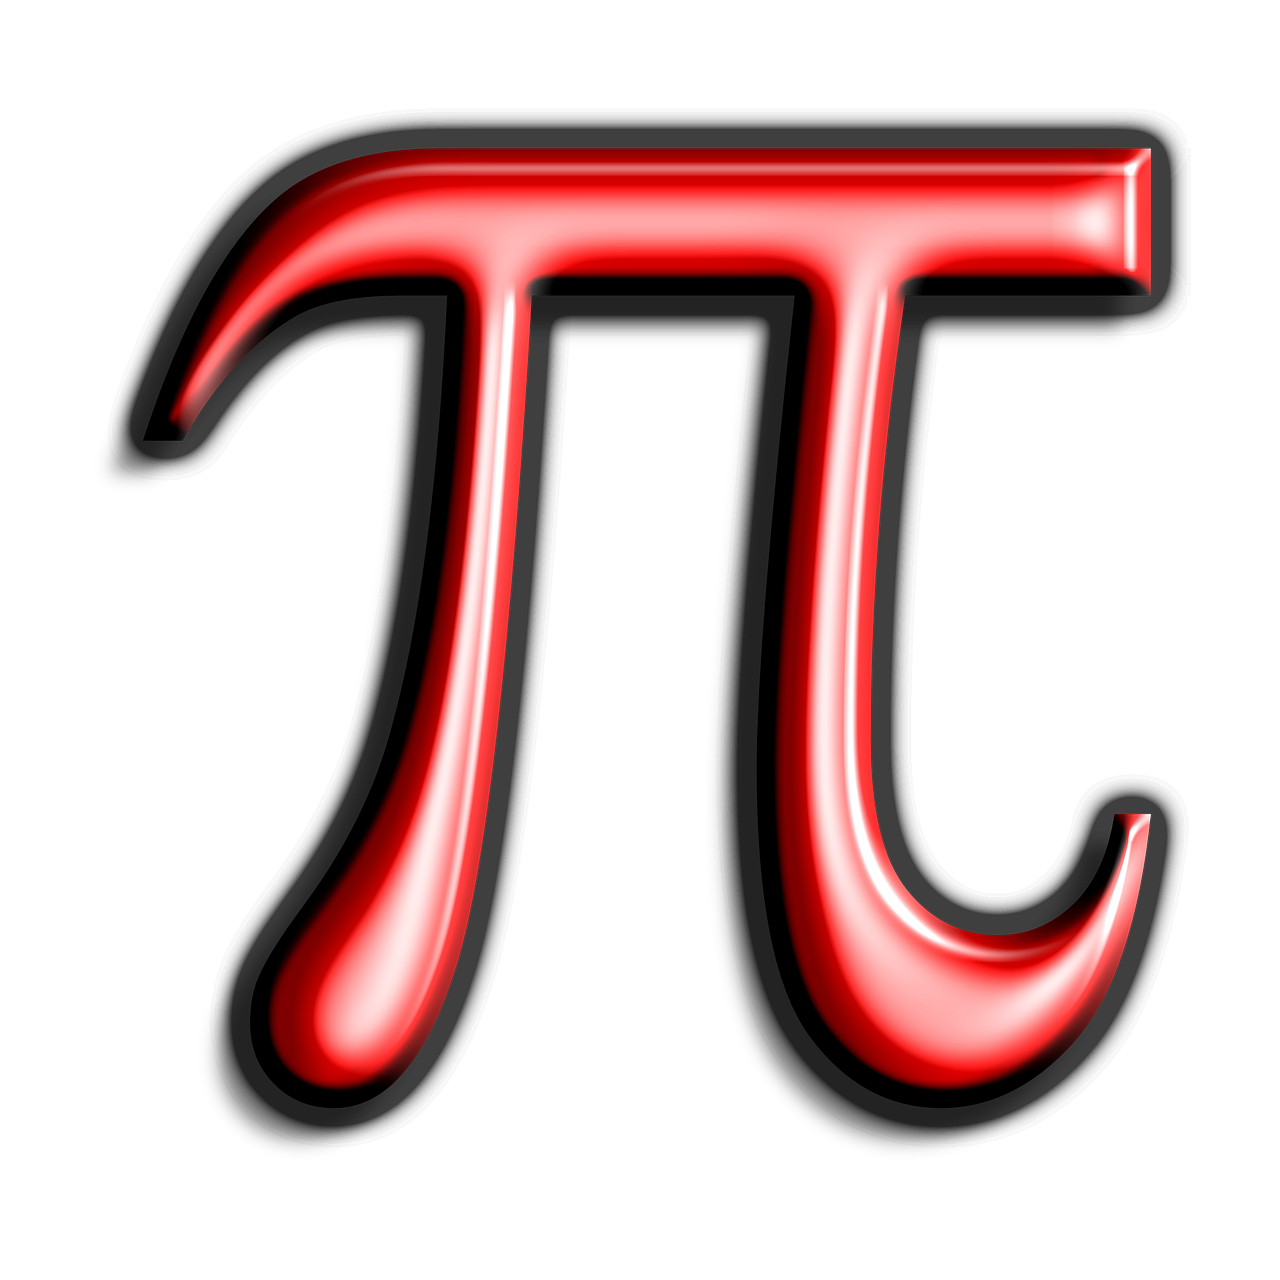 pi maths symbol free photo